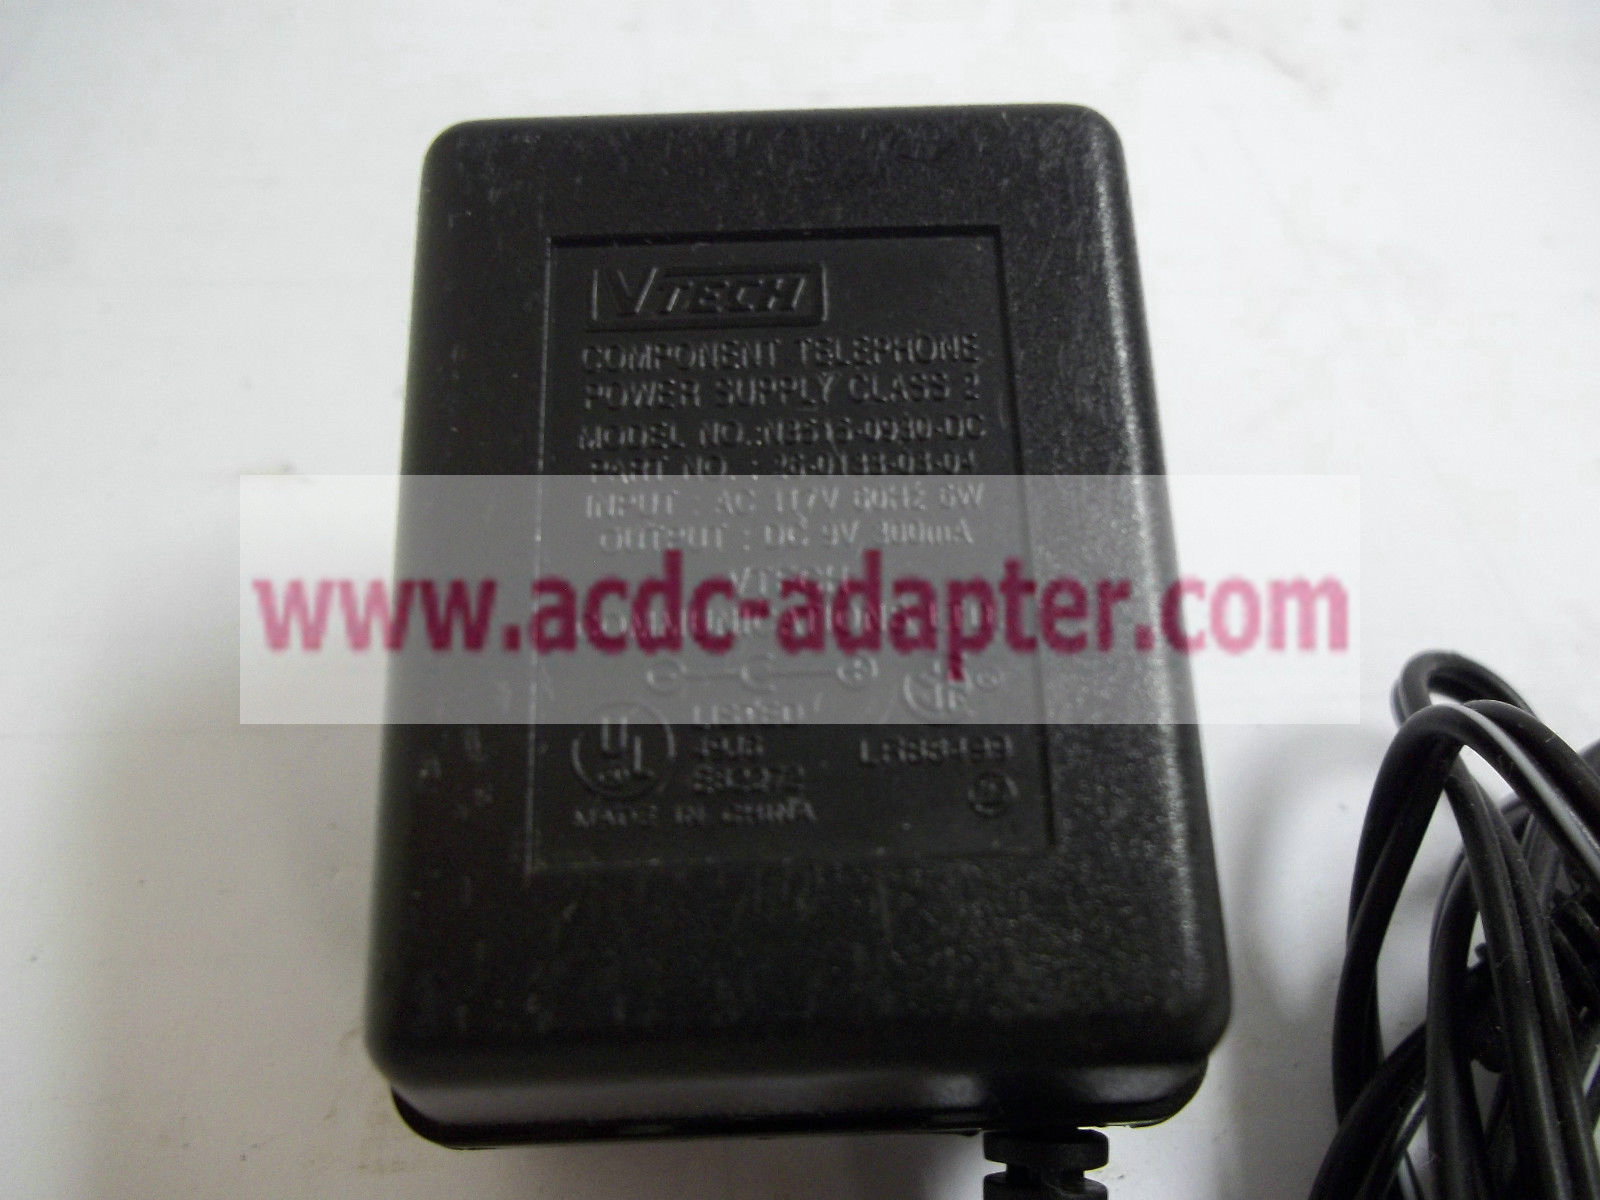 NEW Vtech N3515-0930-DC117v power supply 9V DC 300mA AC ADAPTER - Click Image to Close